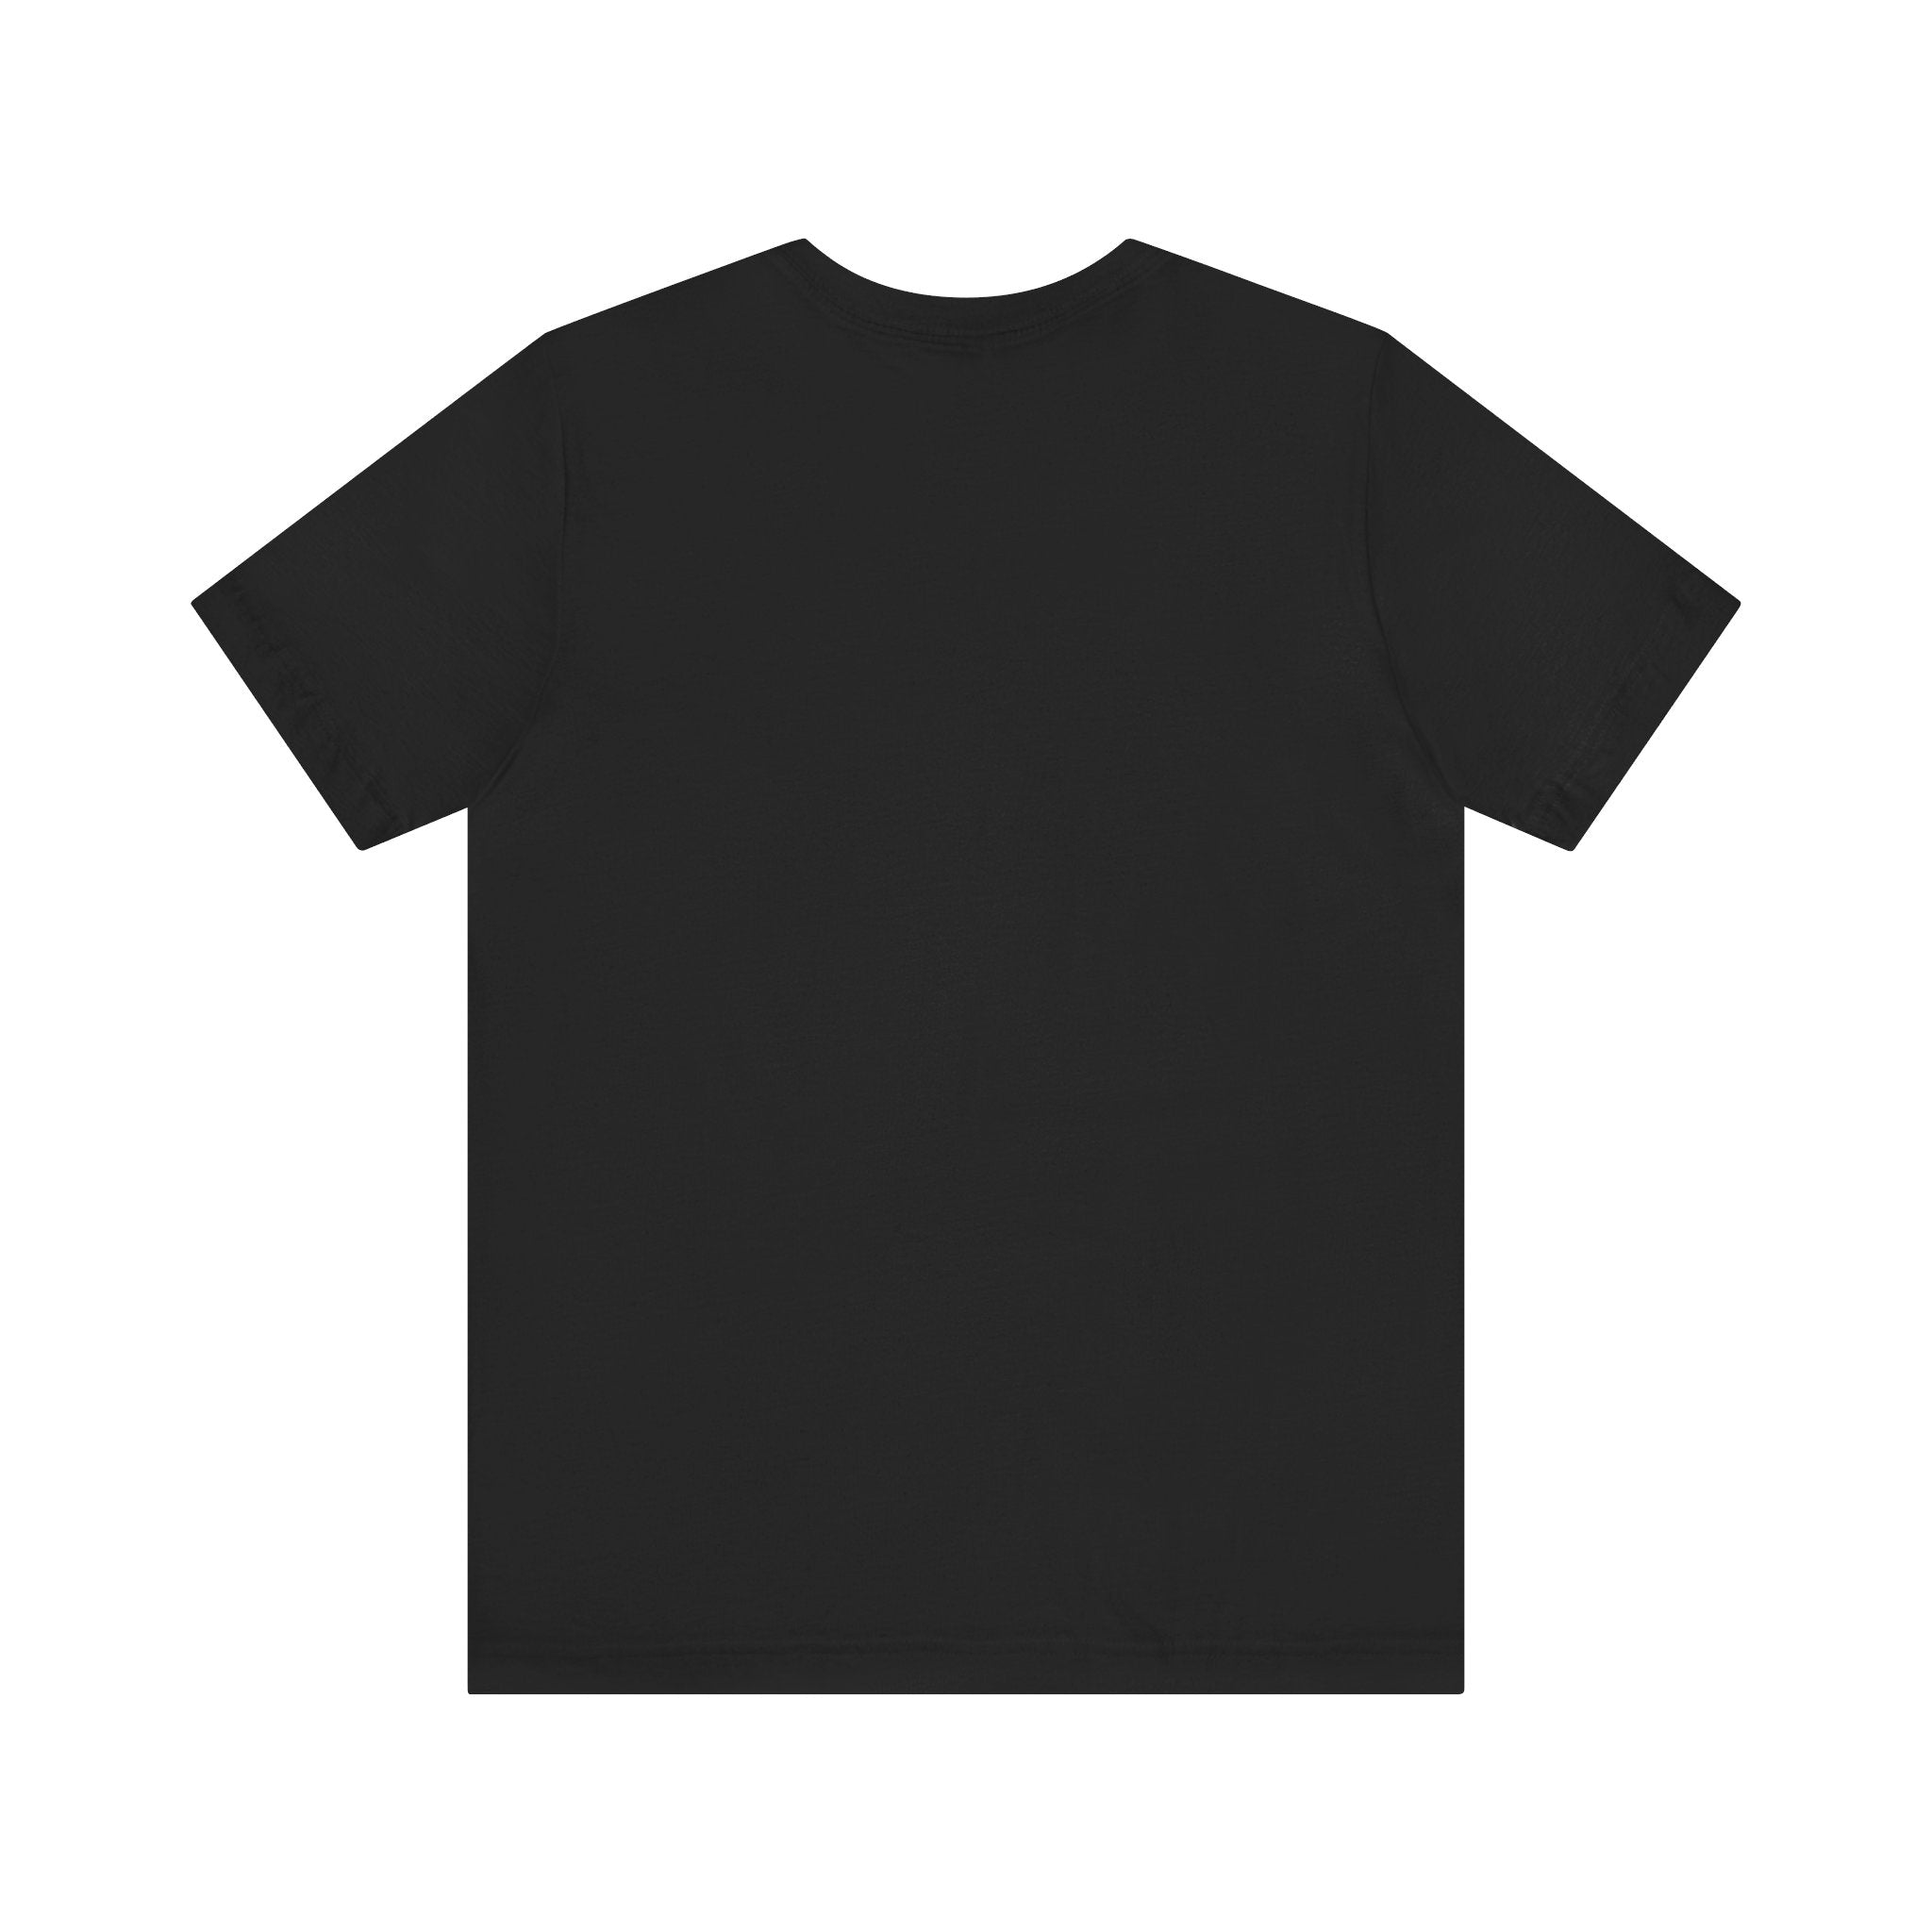 Black MMIP MMIW Shirt, Unisex Jersey Short Sleeve Tee